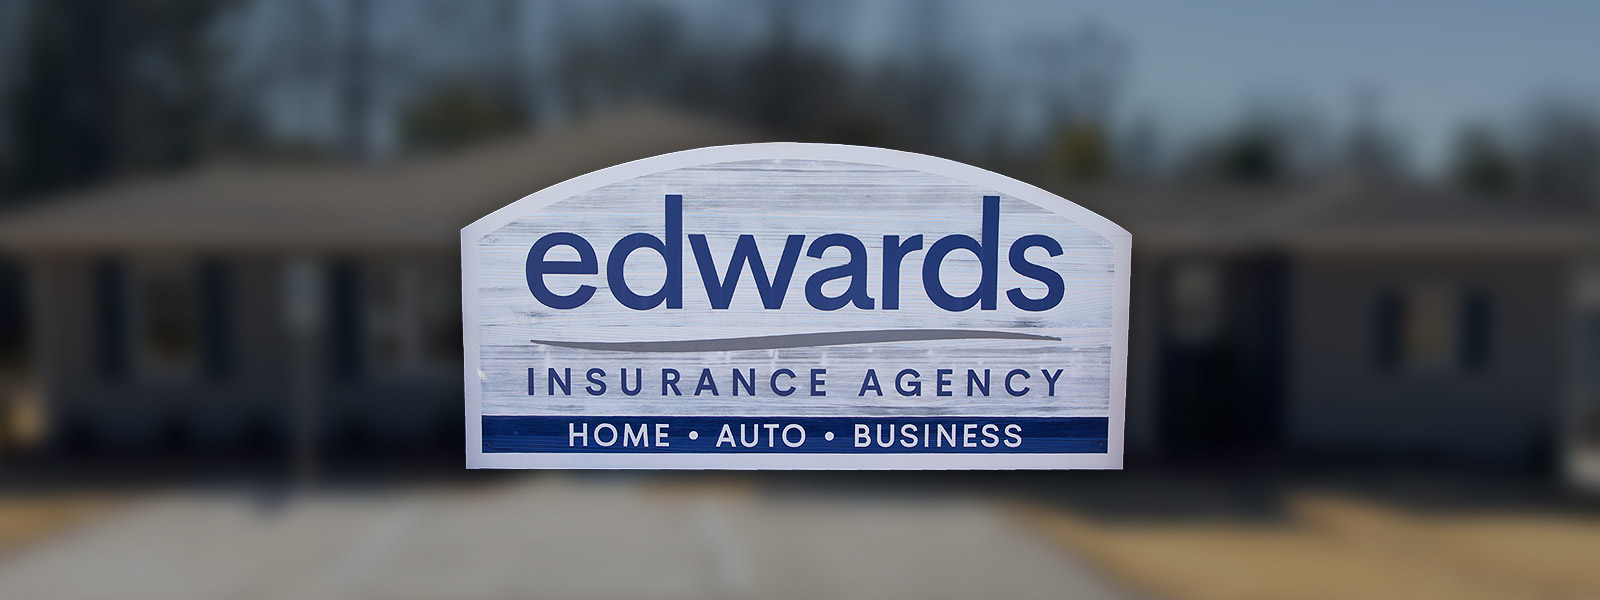 Edwards Insurance Agency Sign